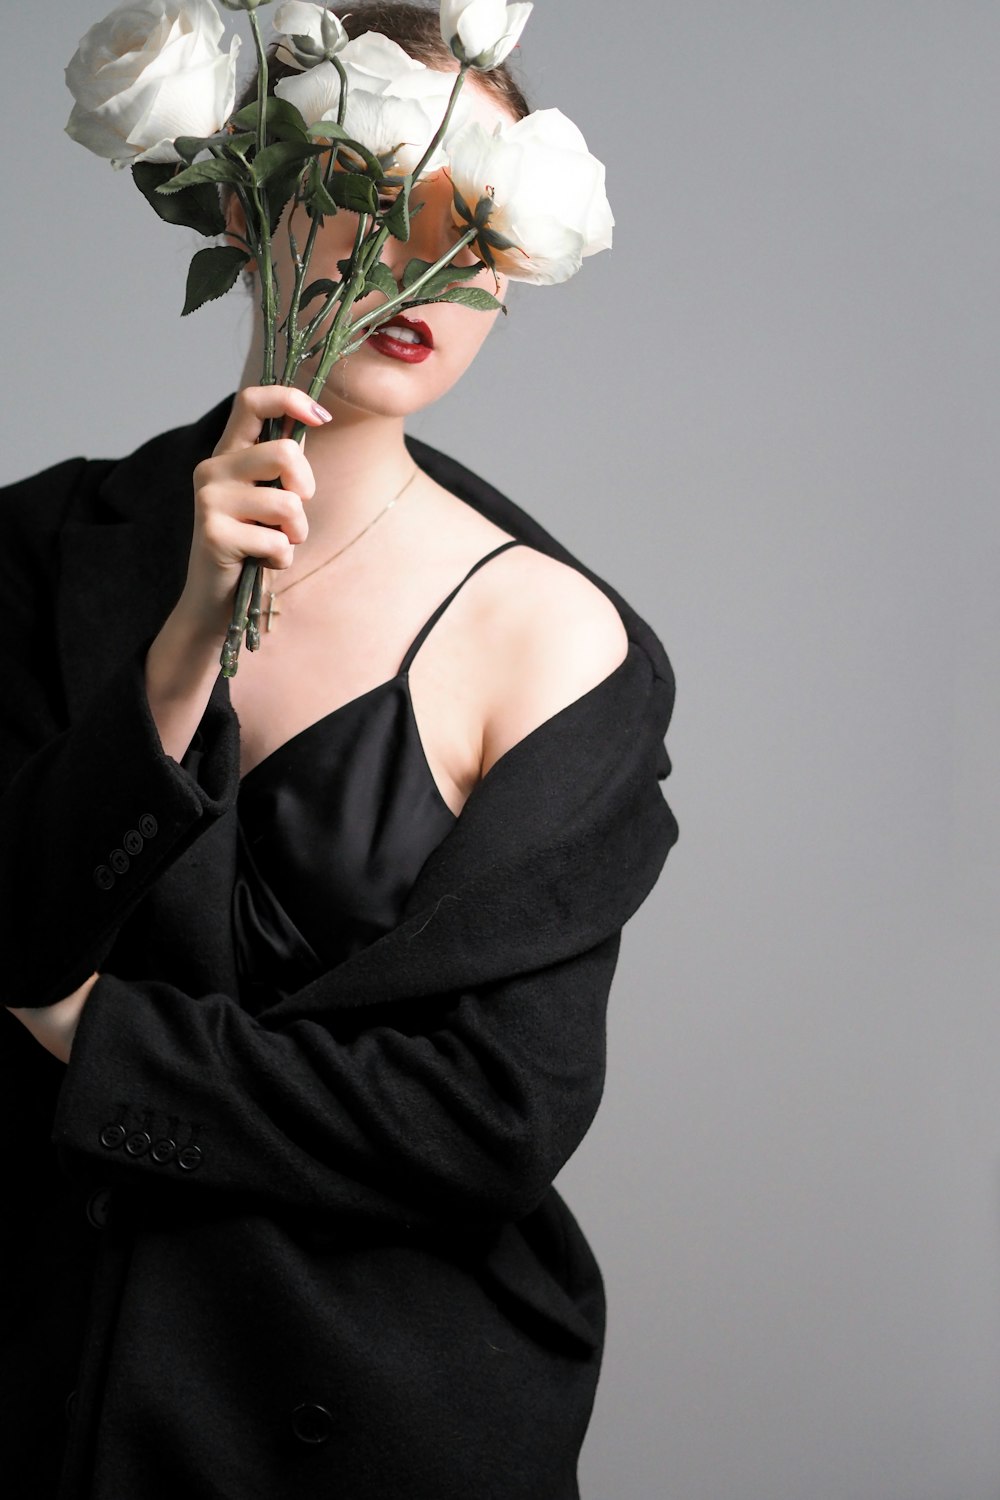 woman in black spaghetti strap top holding white rose